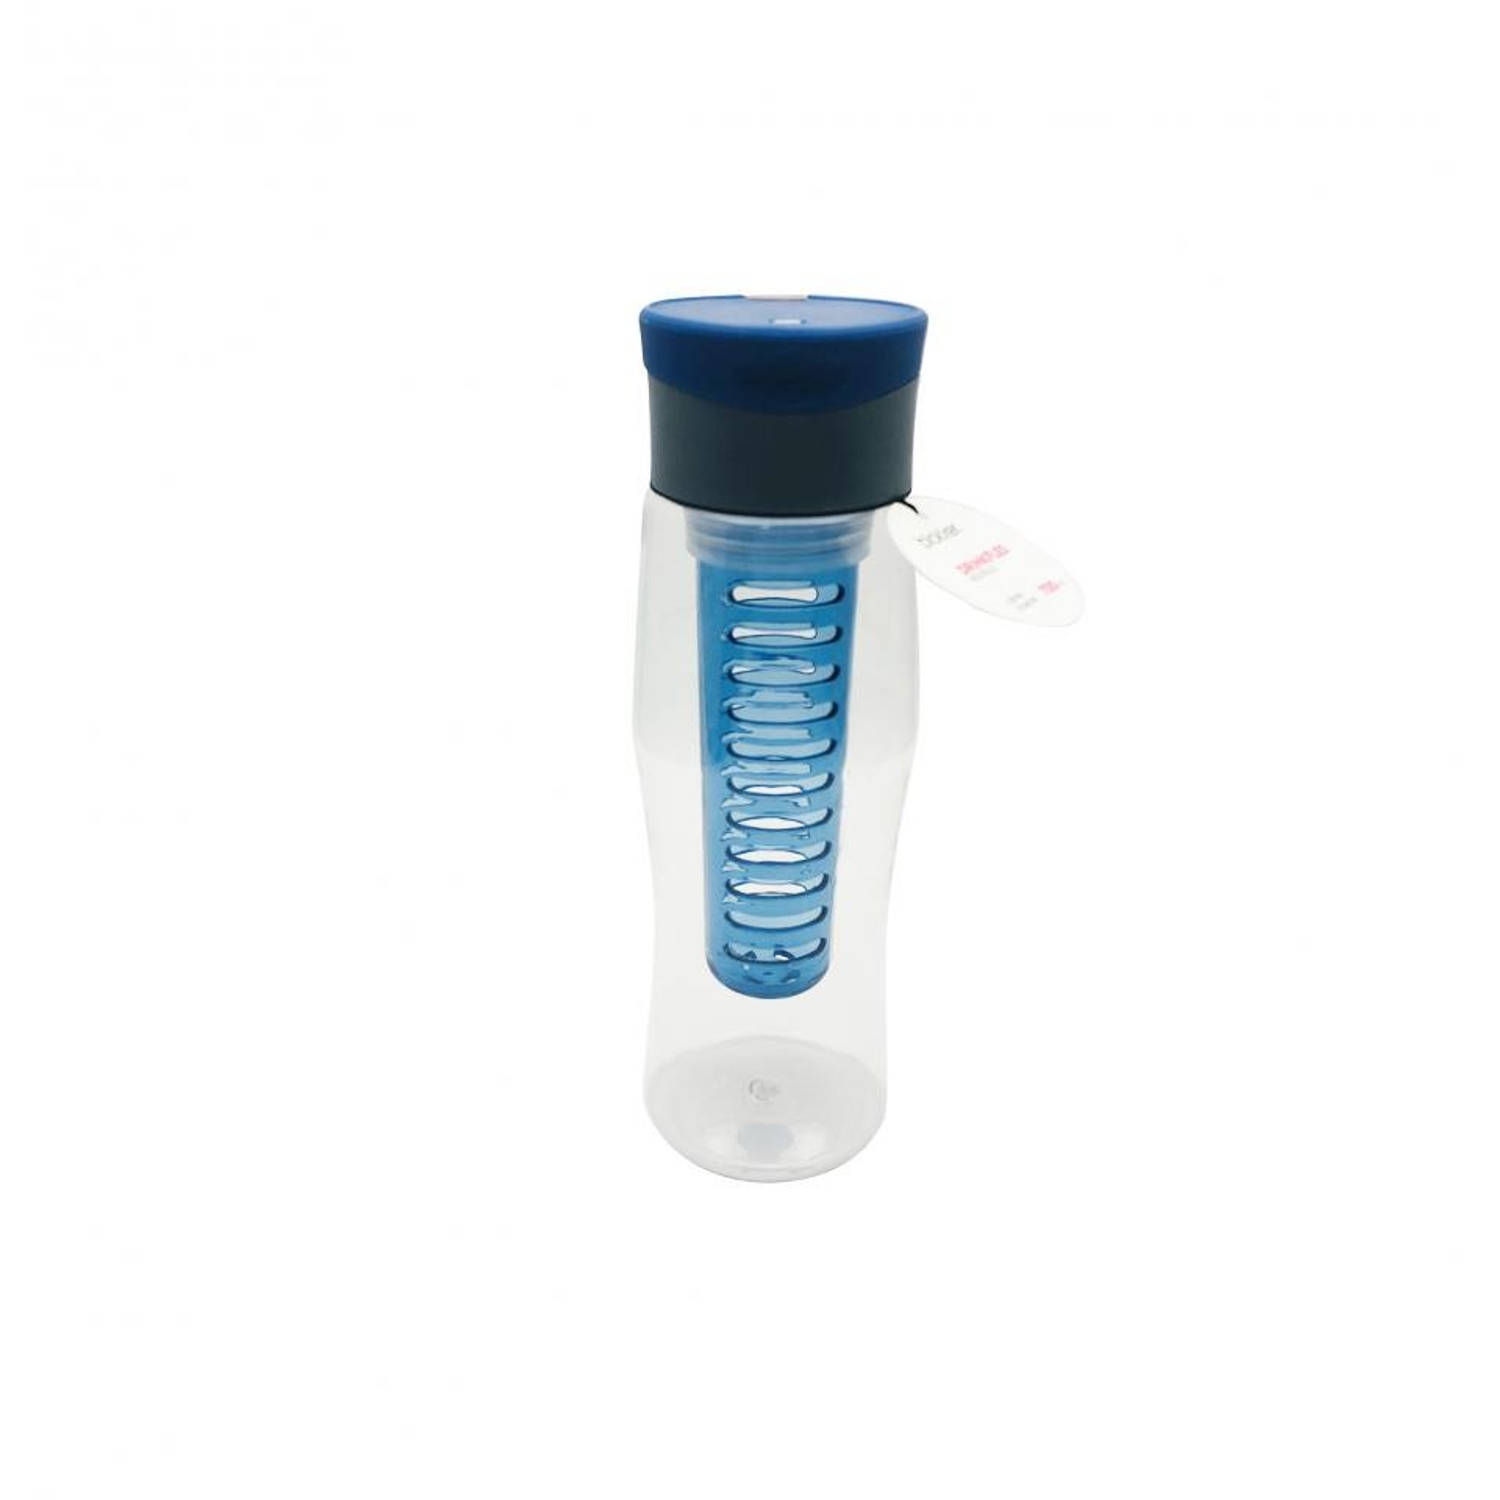 Meer dan wat dan ook Verzorgen woede Blokker waterfles met infuser - donkerblauw - 700 ml | Blokker